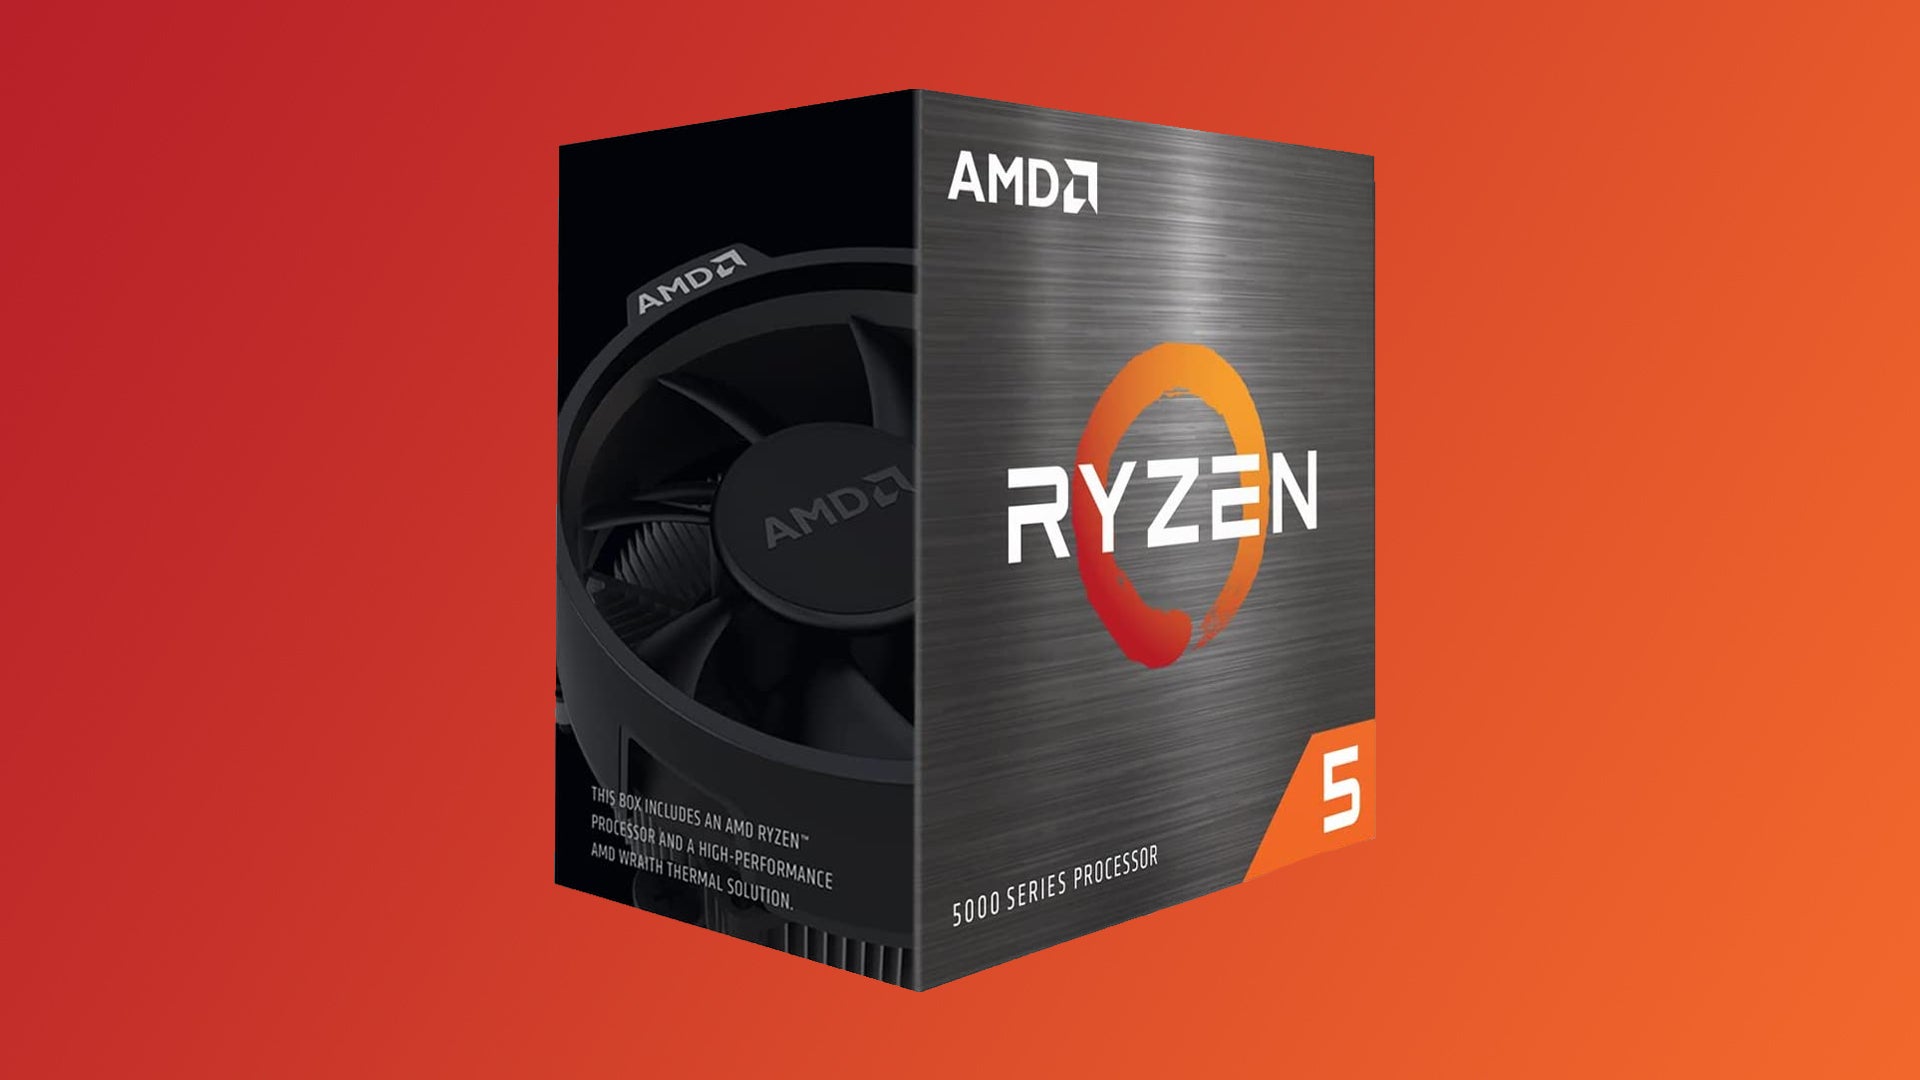 AMD's excellent value Ryzen 5 5600 processor is 32% off at Amazon